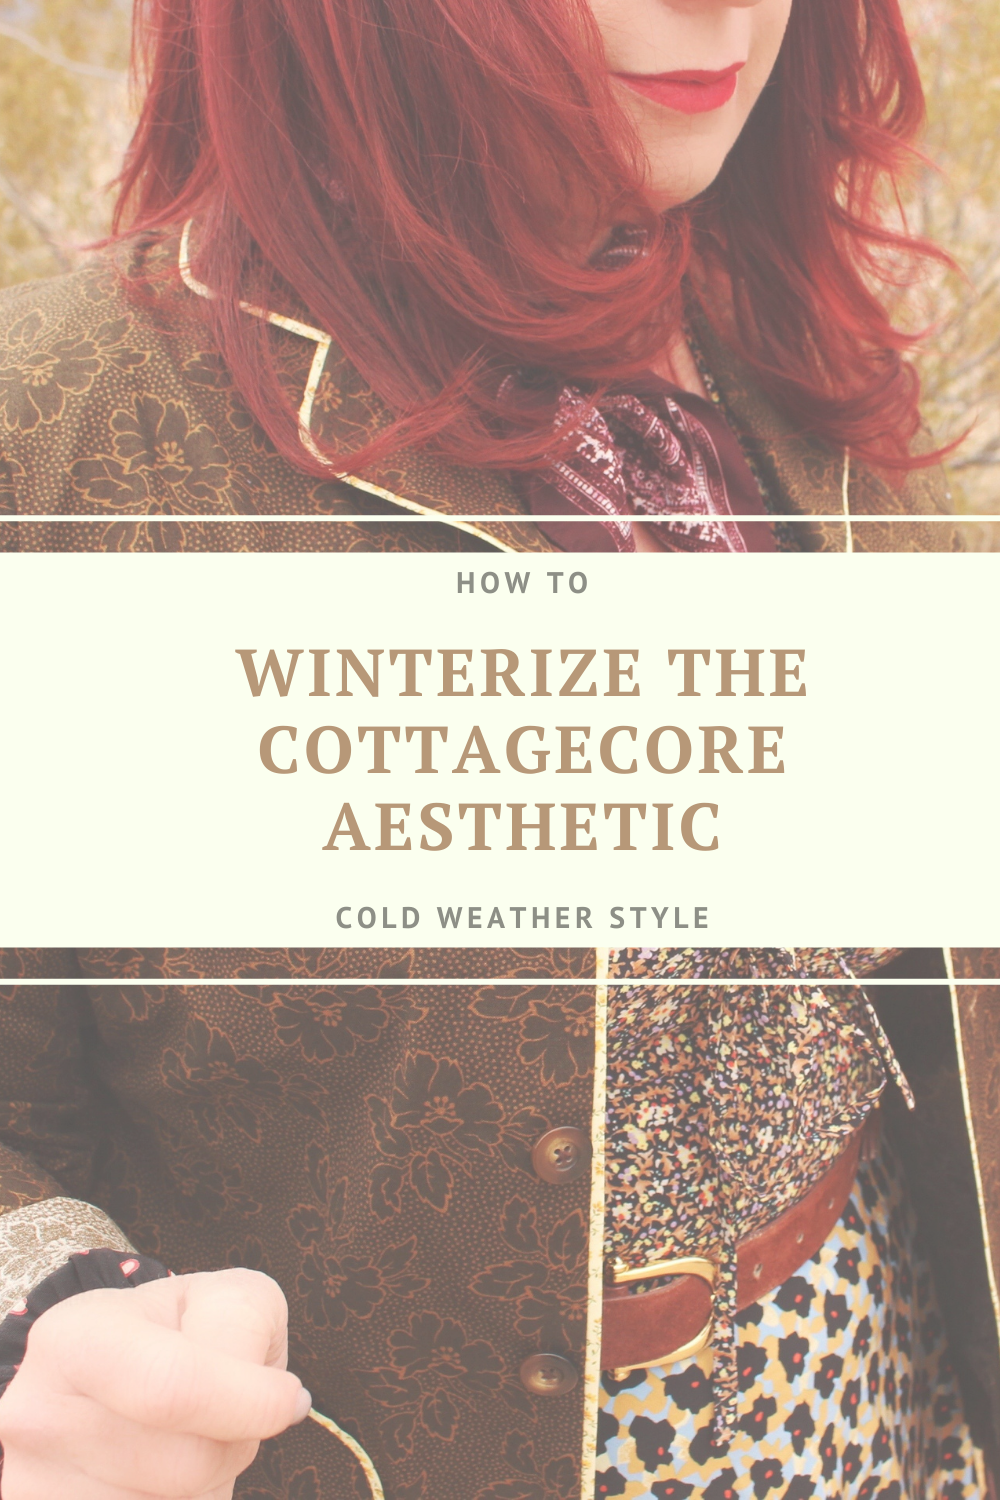 Winterize cottagecore